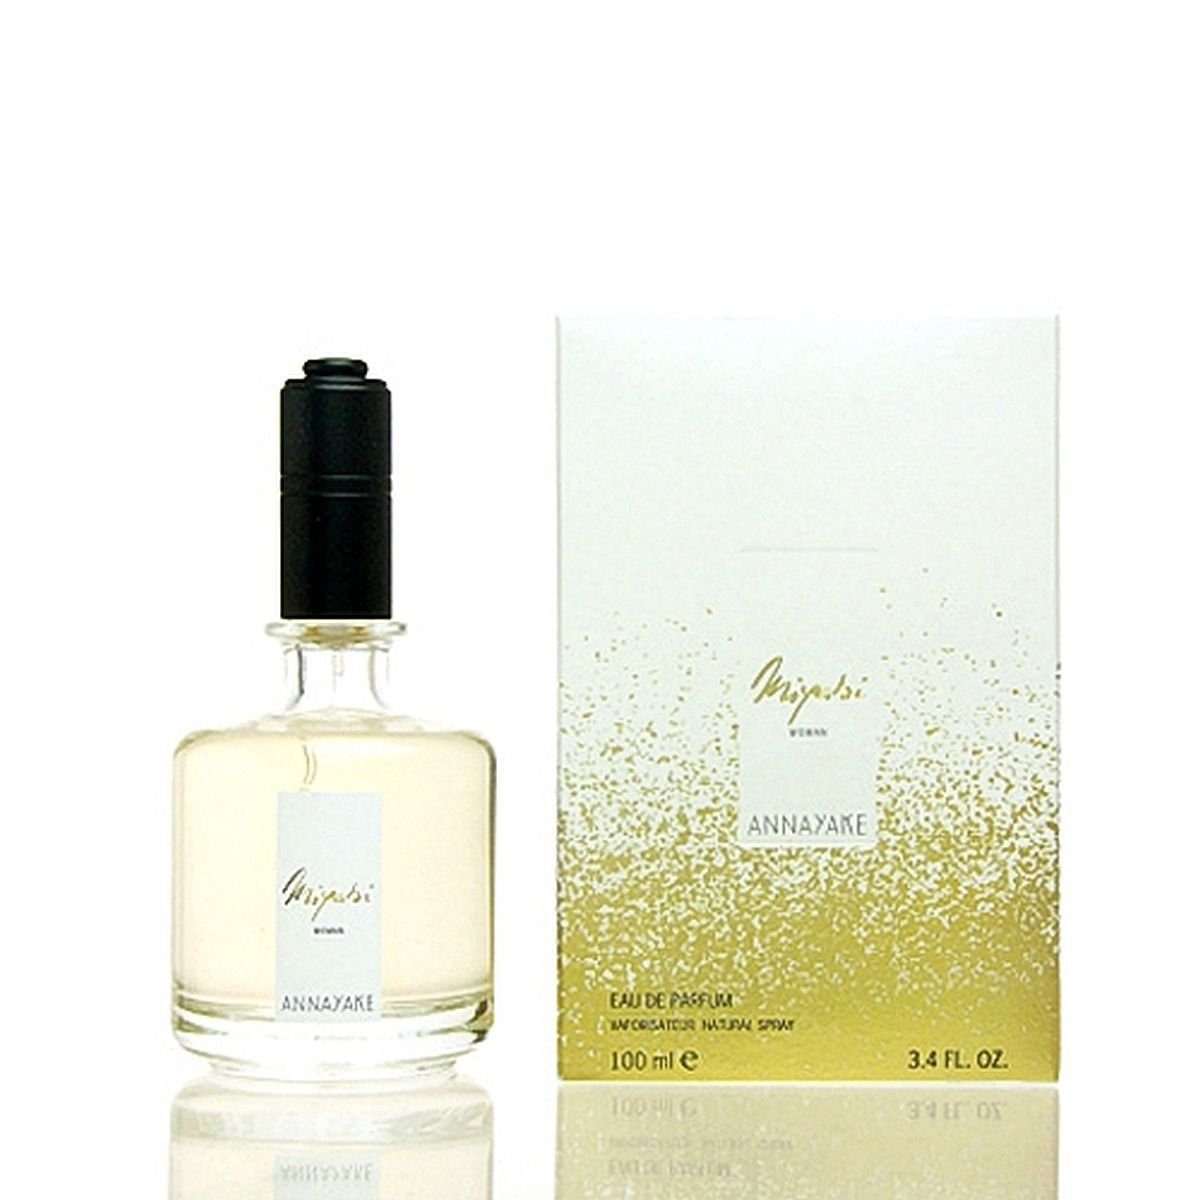 Produktart: de Eau Eau Parfum ANNAYAKE de Annayake de Miyabi Parfum ml, Eau Parfum Woman 100